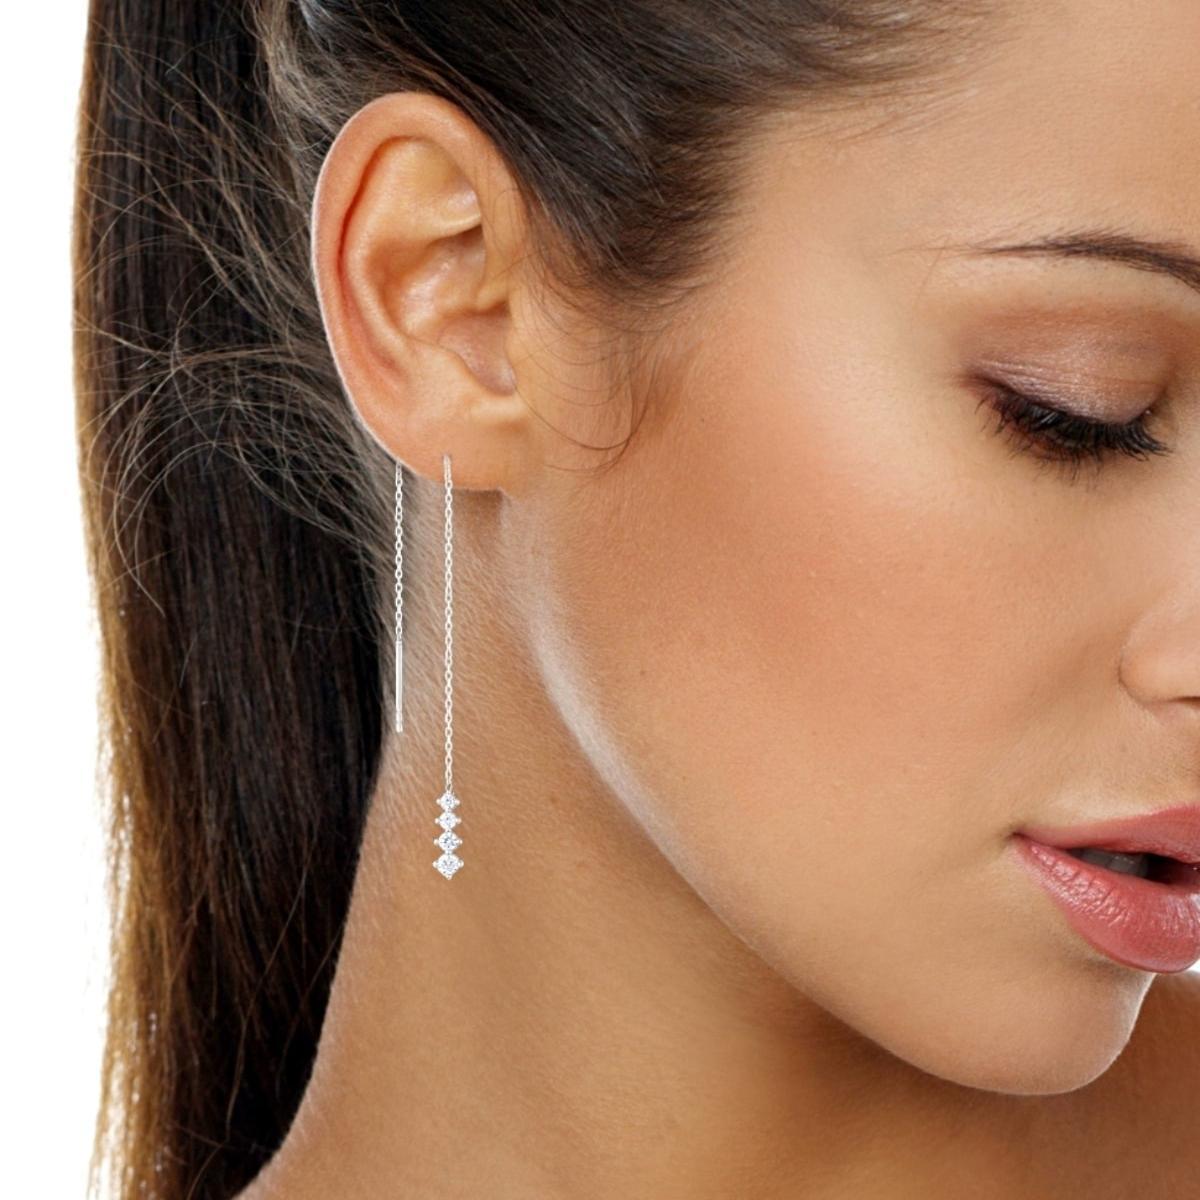 Solitaire Diamond Earrings • Threader Solitaire Diamond Earrings - Trending Silver Gifts